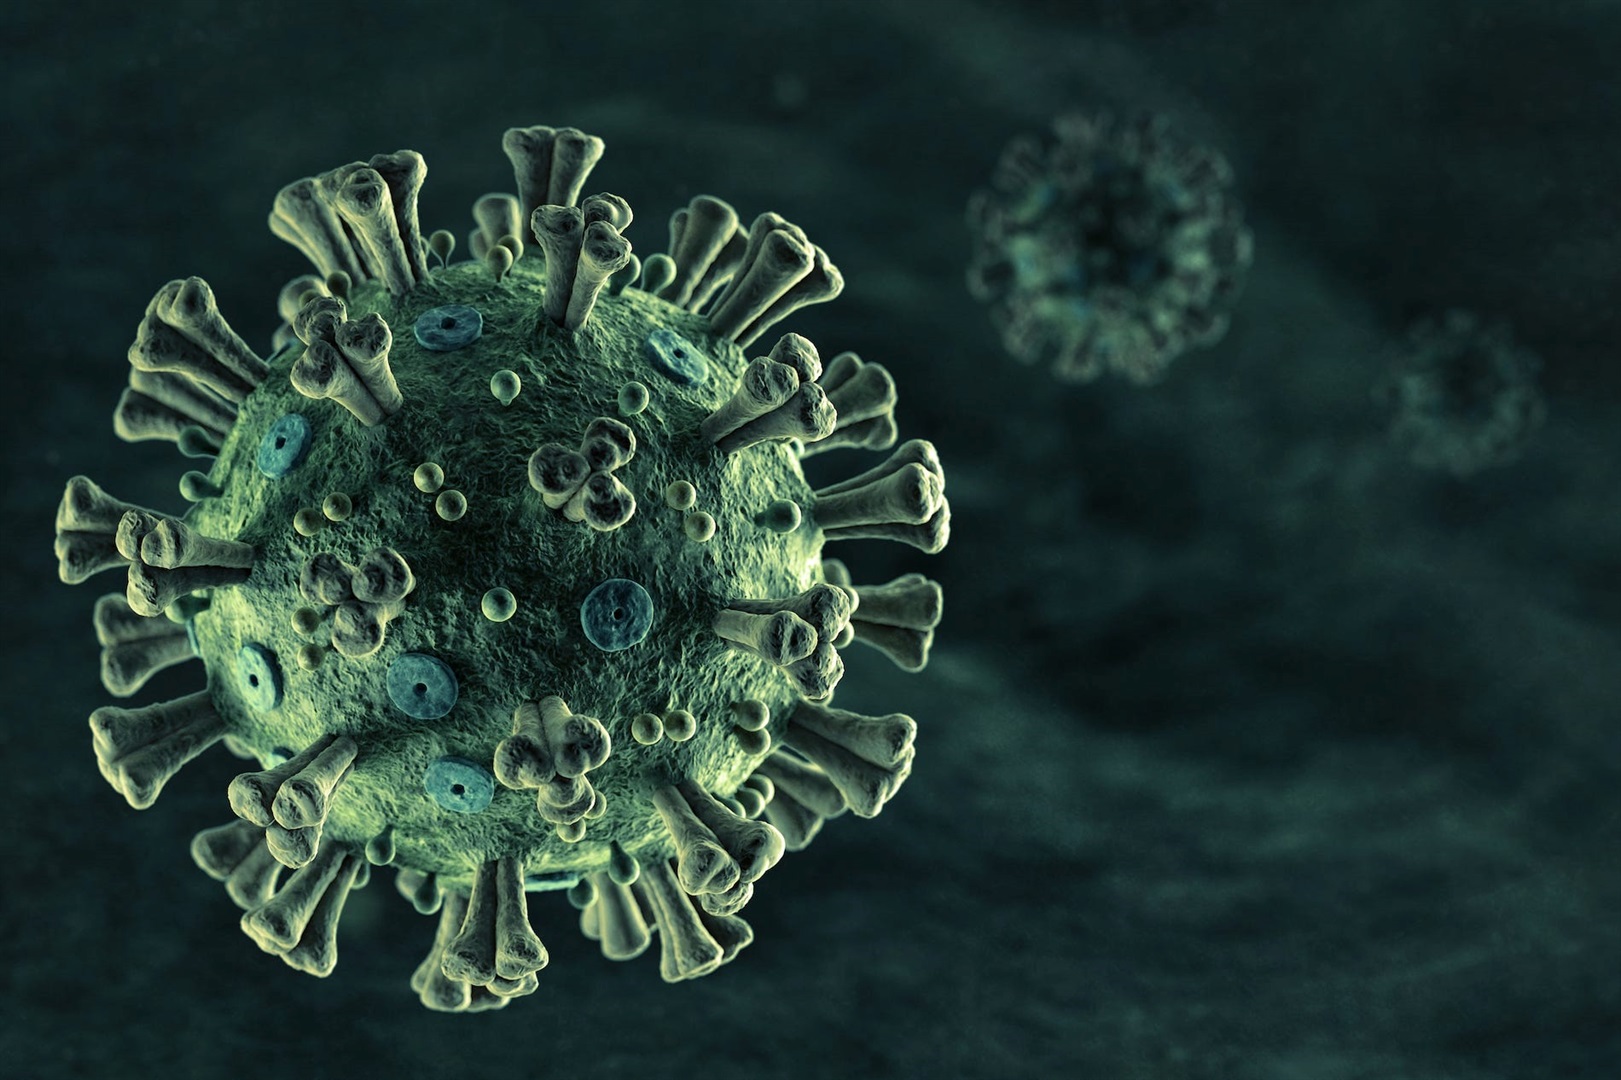 An illustration of the novel coronavirus. 